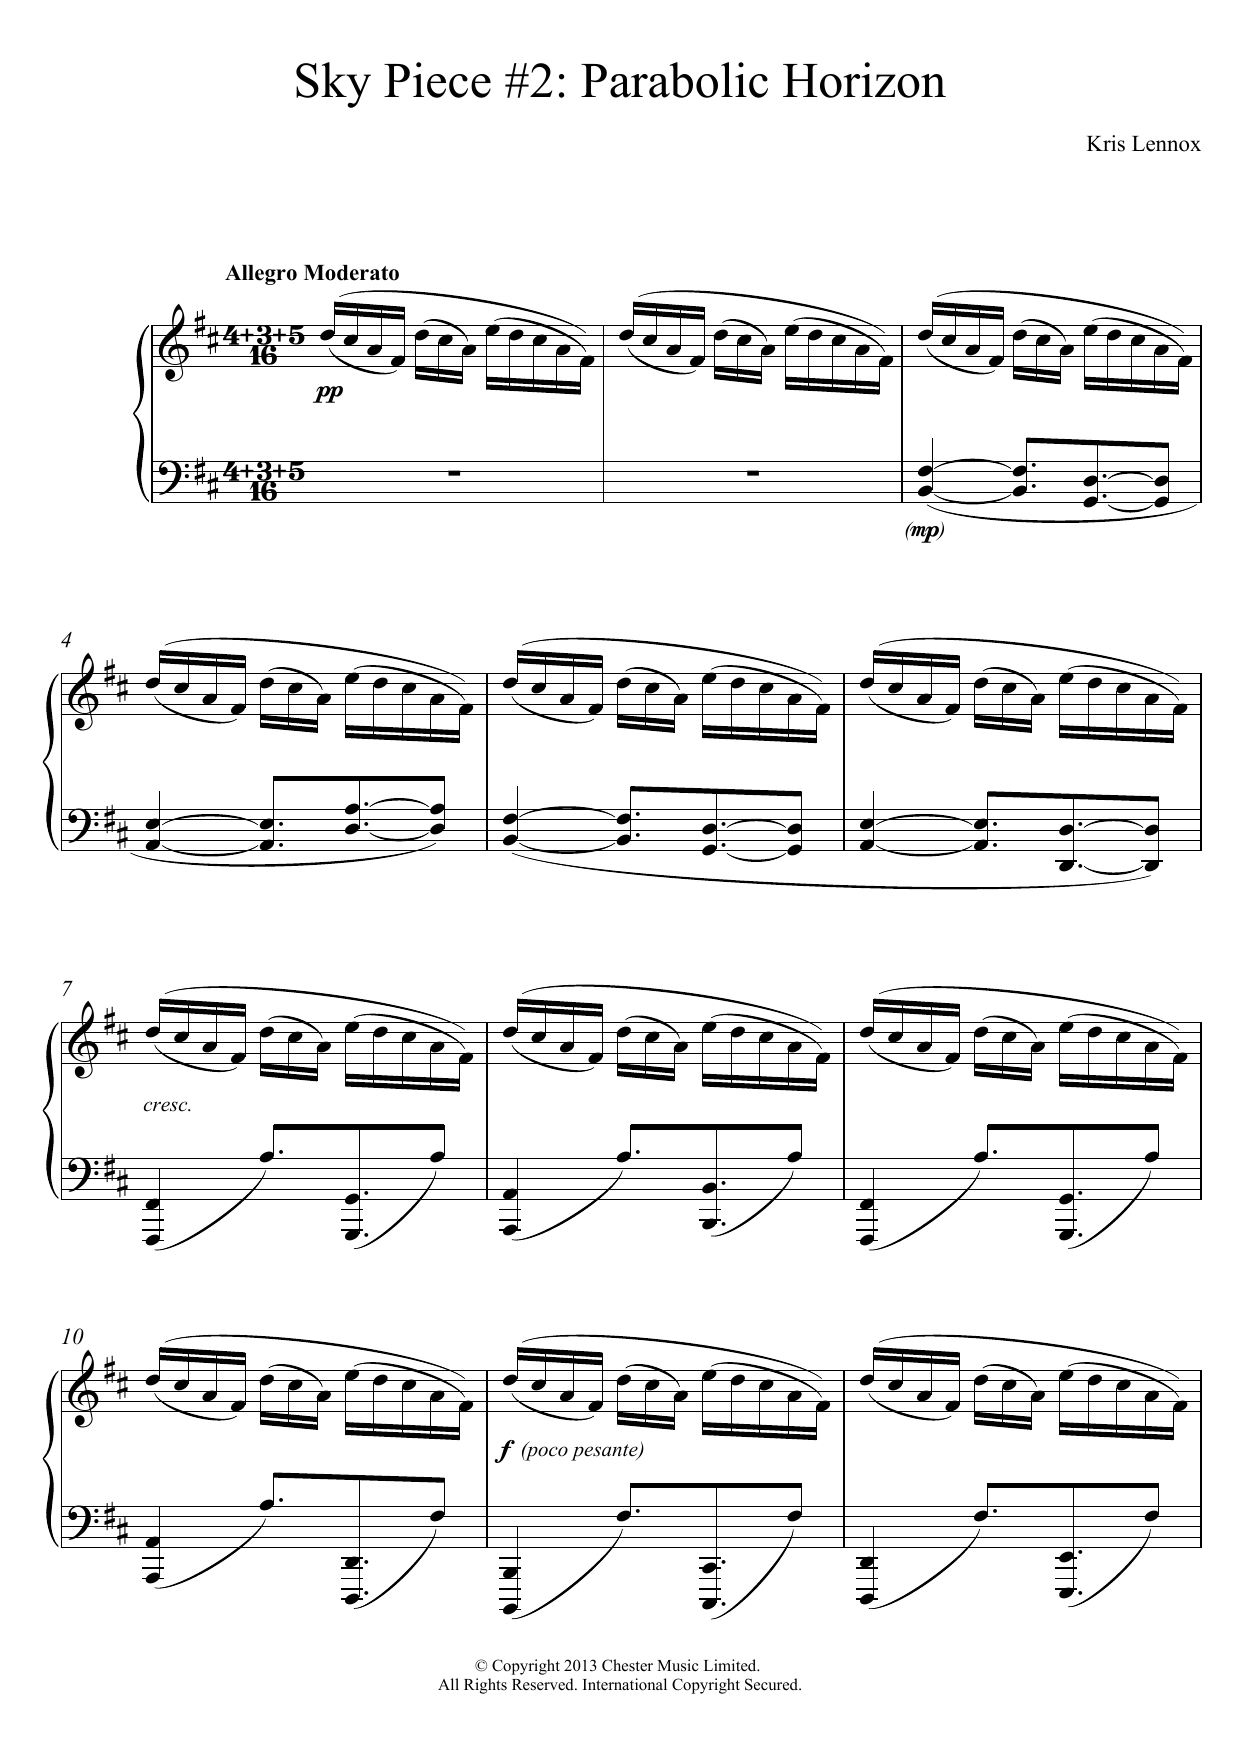 Kris Lennox Sky Piece #2 - Parabolic Horizon Sheet Music Notes & Chords for Piano - Download or Print PDF